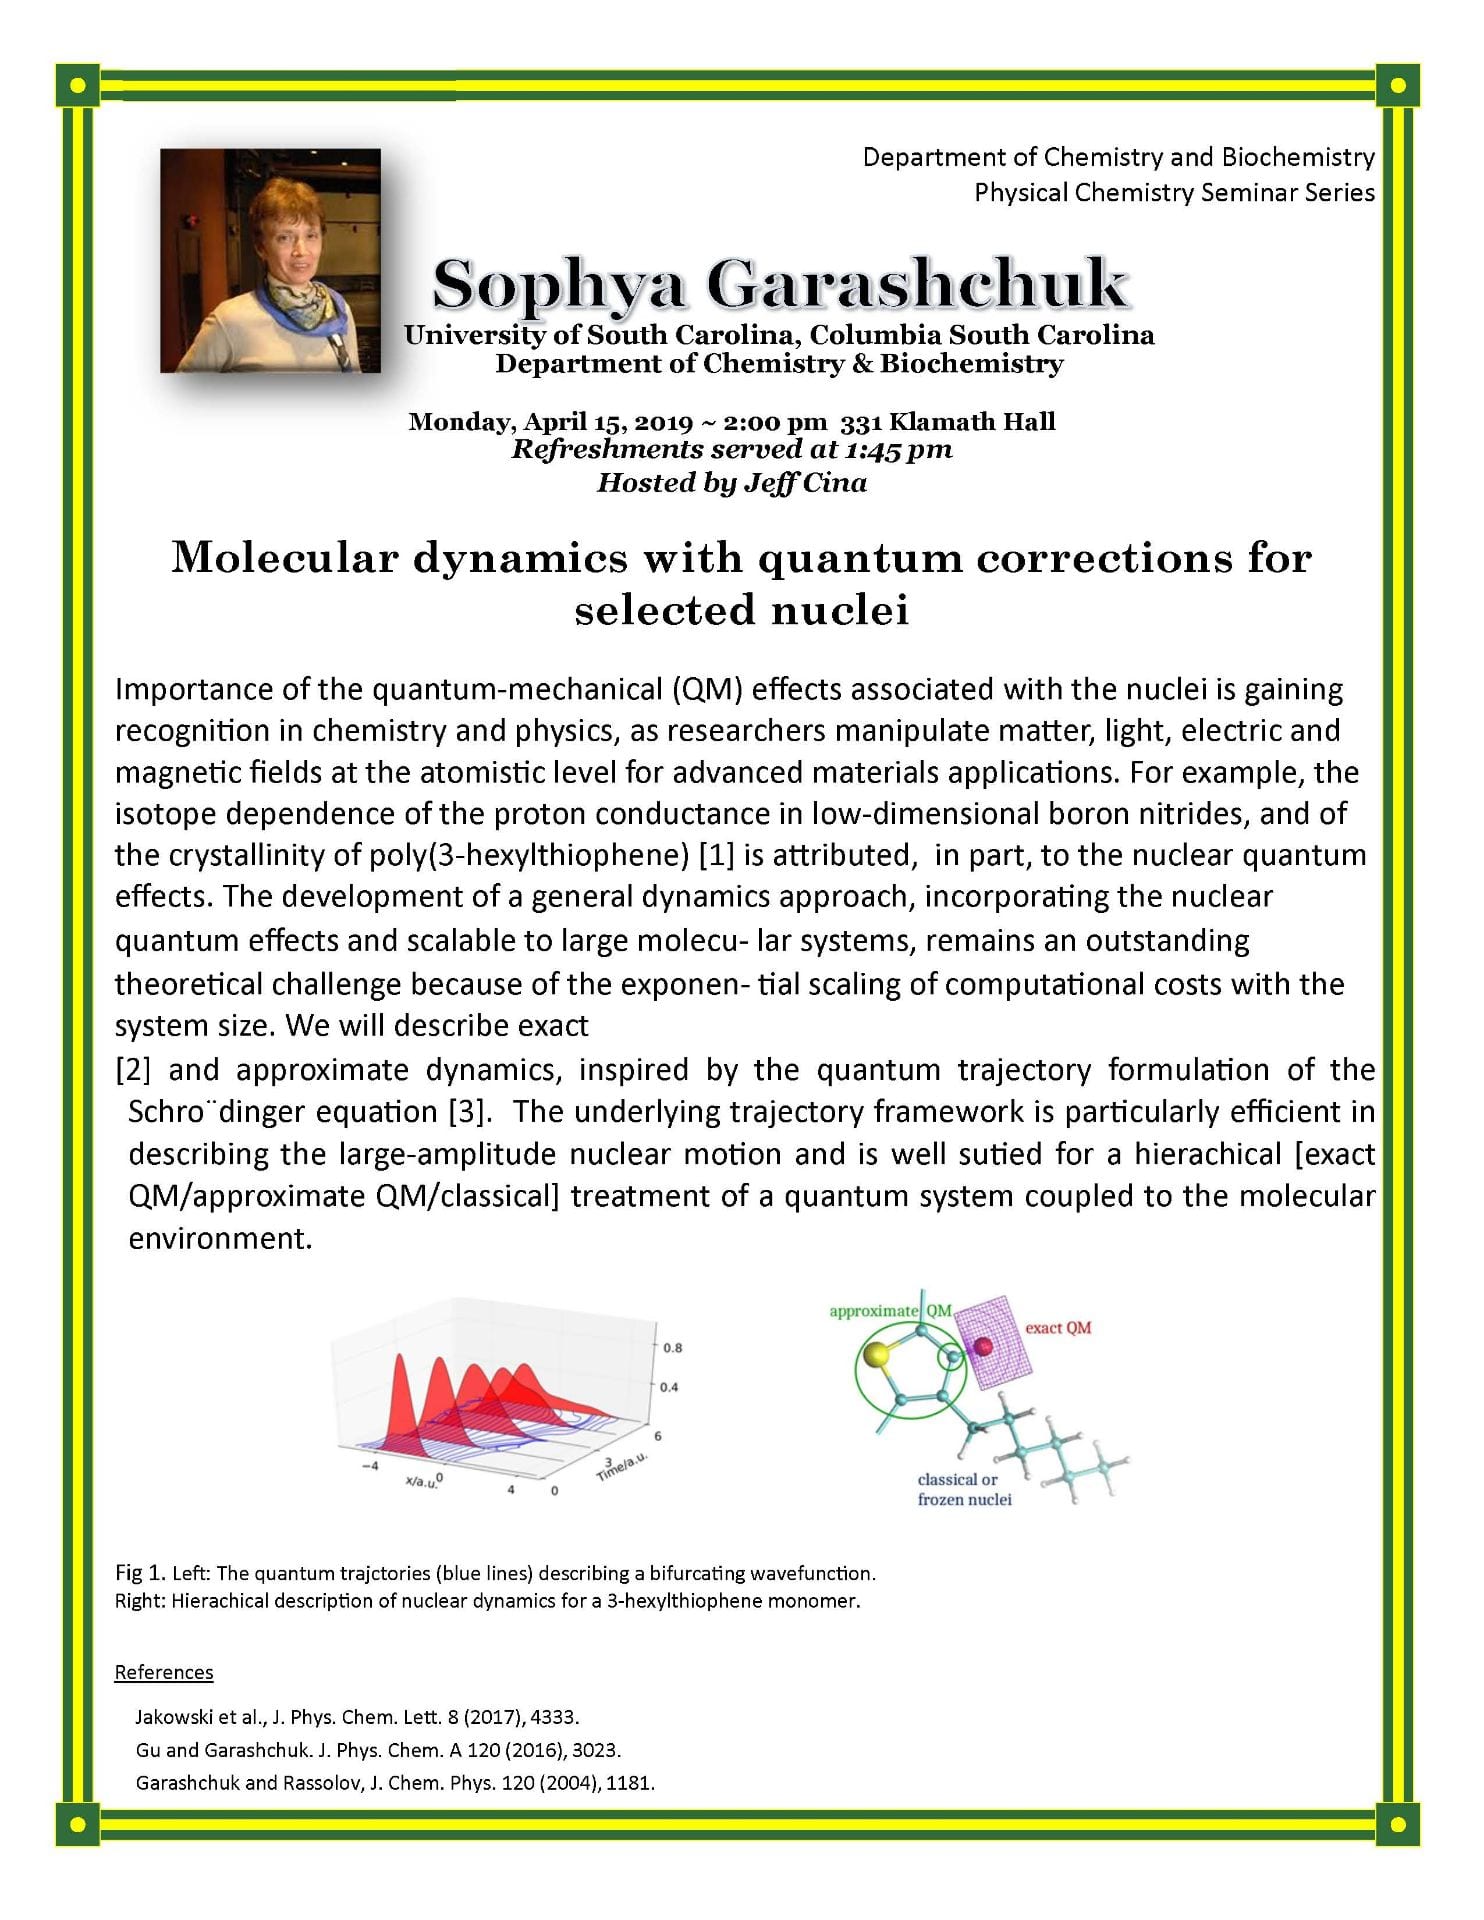 Garashchuk Seminar Poste